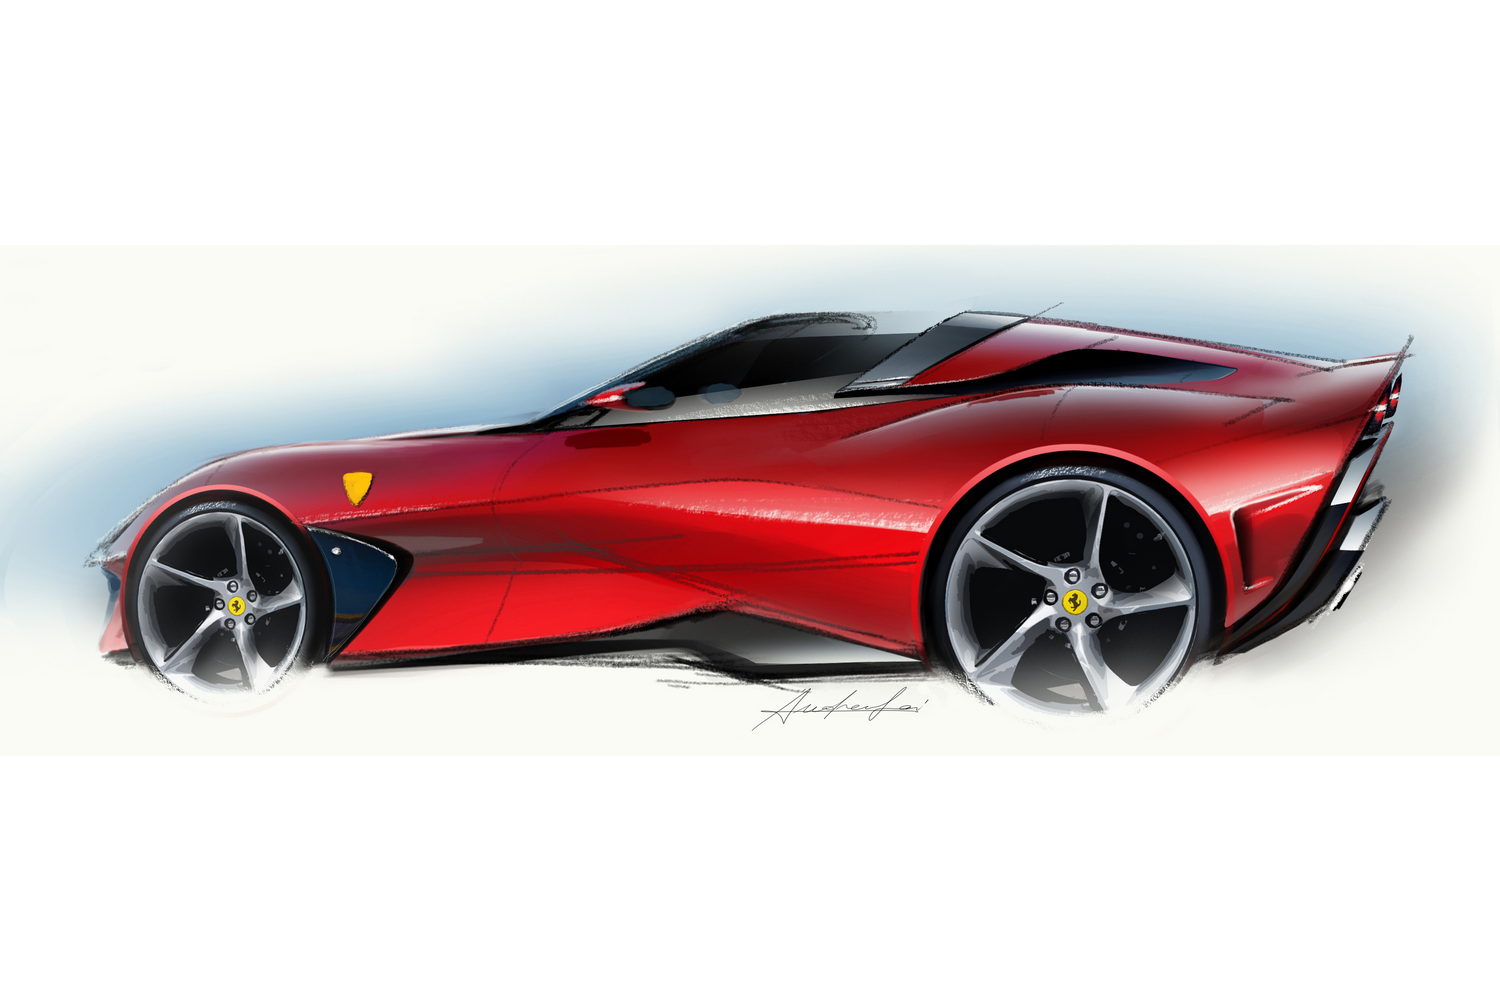 Ferrari SP51 is a one-off head-turner